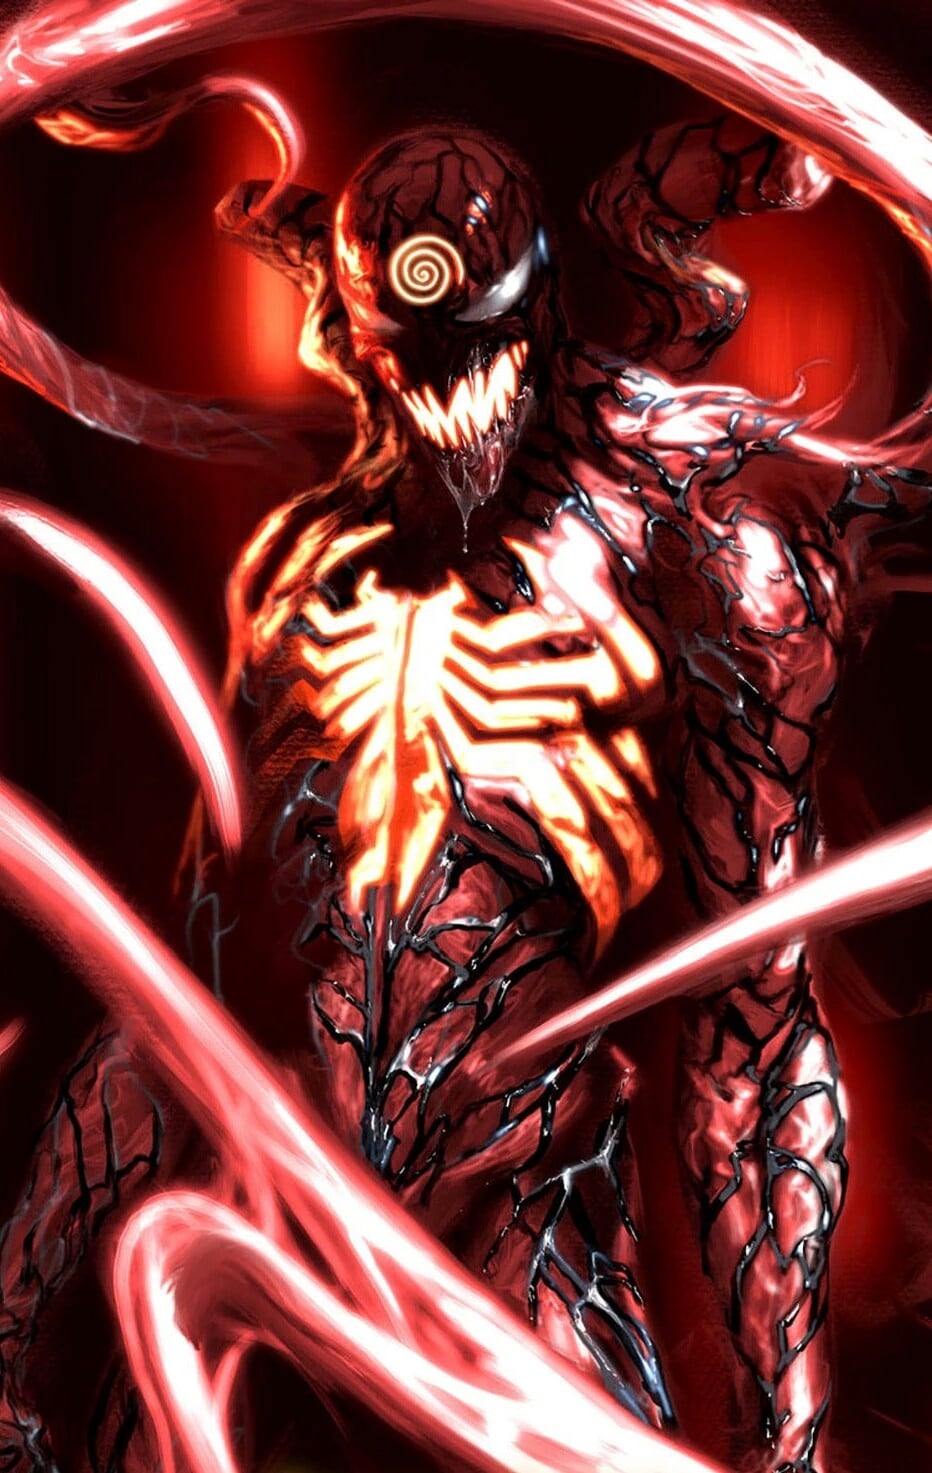 Eddie Brock Becomes The Ultimate Venom/Avenger Hybrid In Absolute Carnage #4